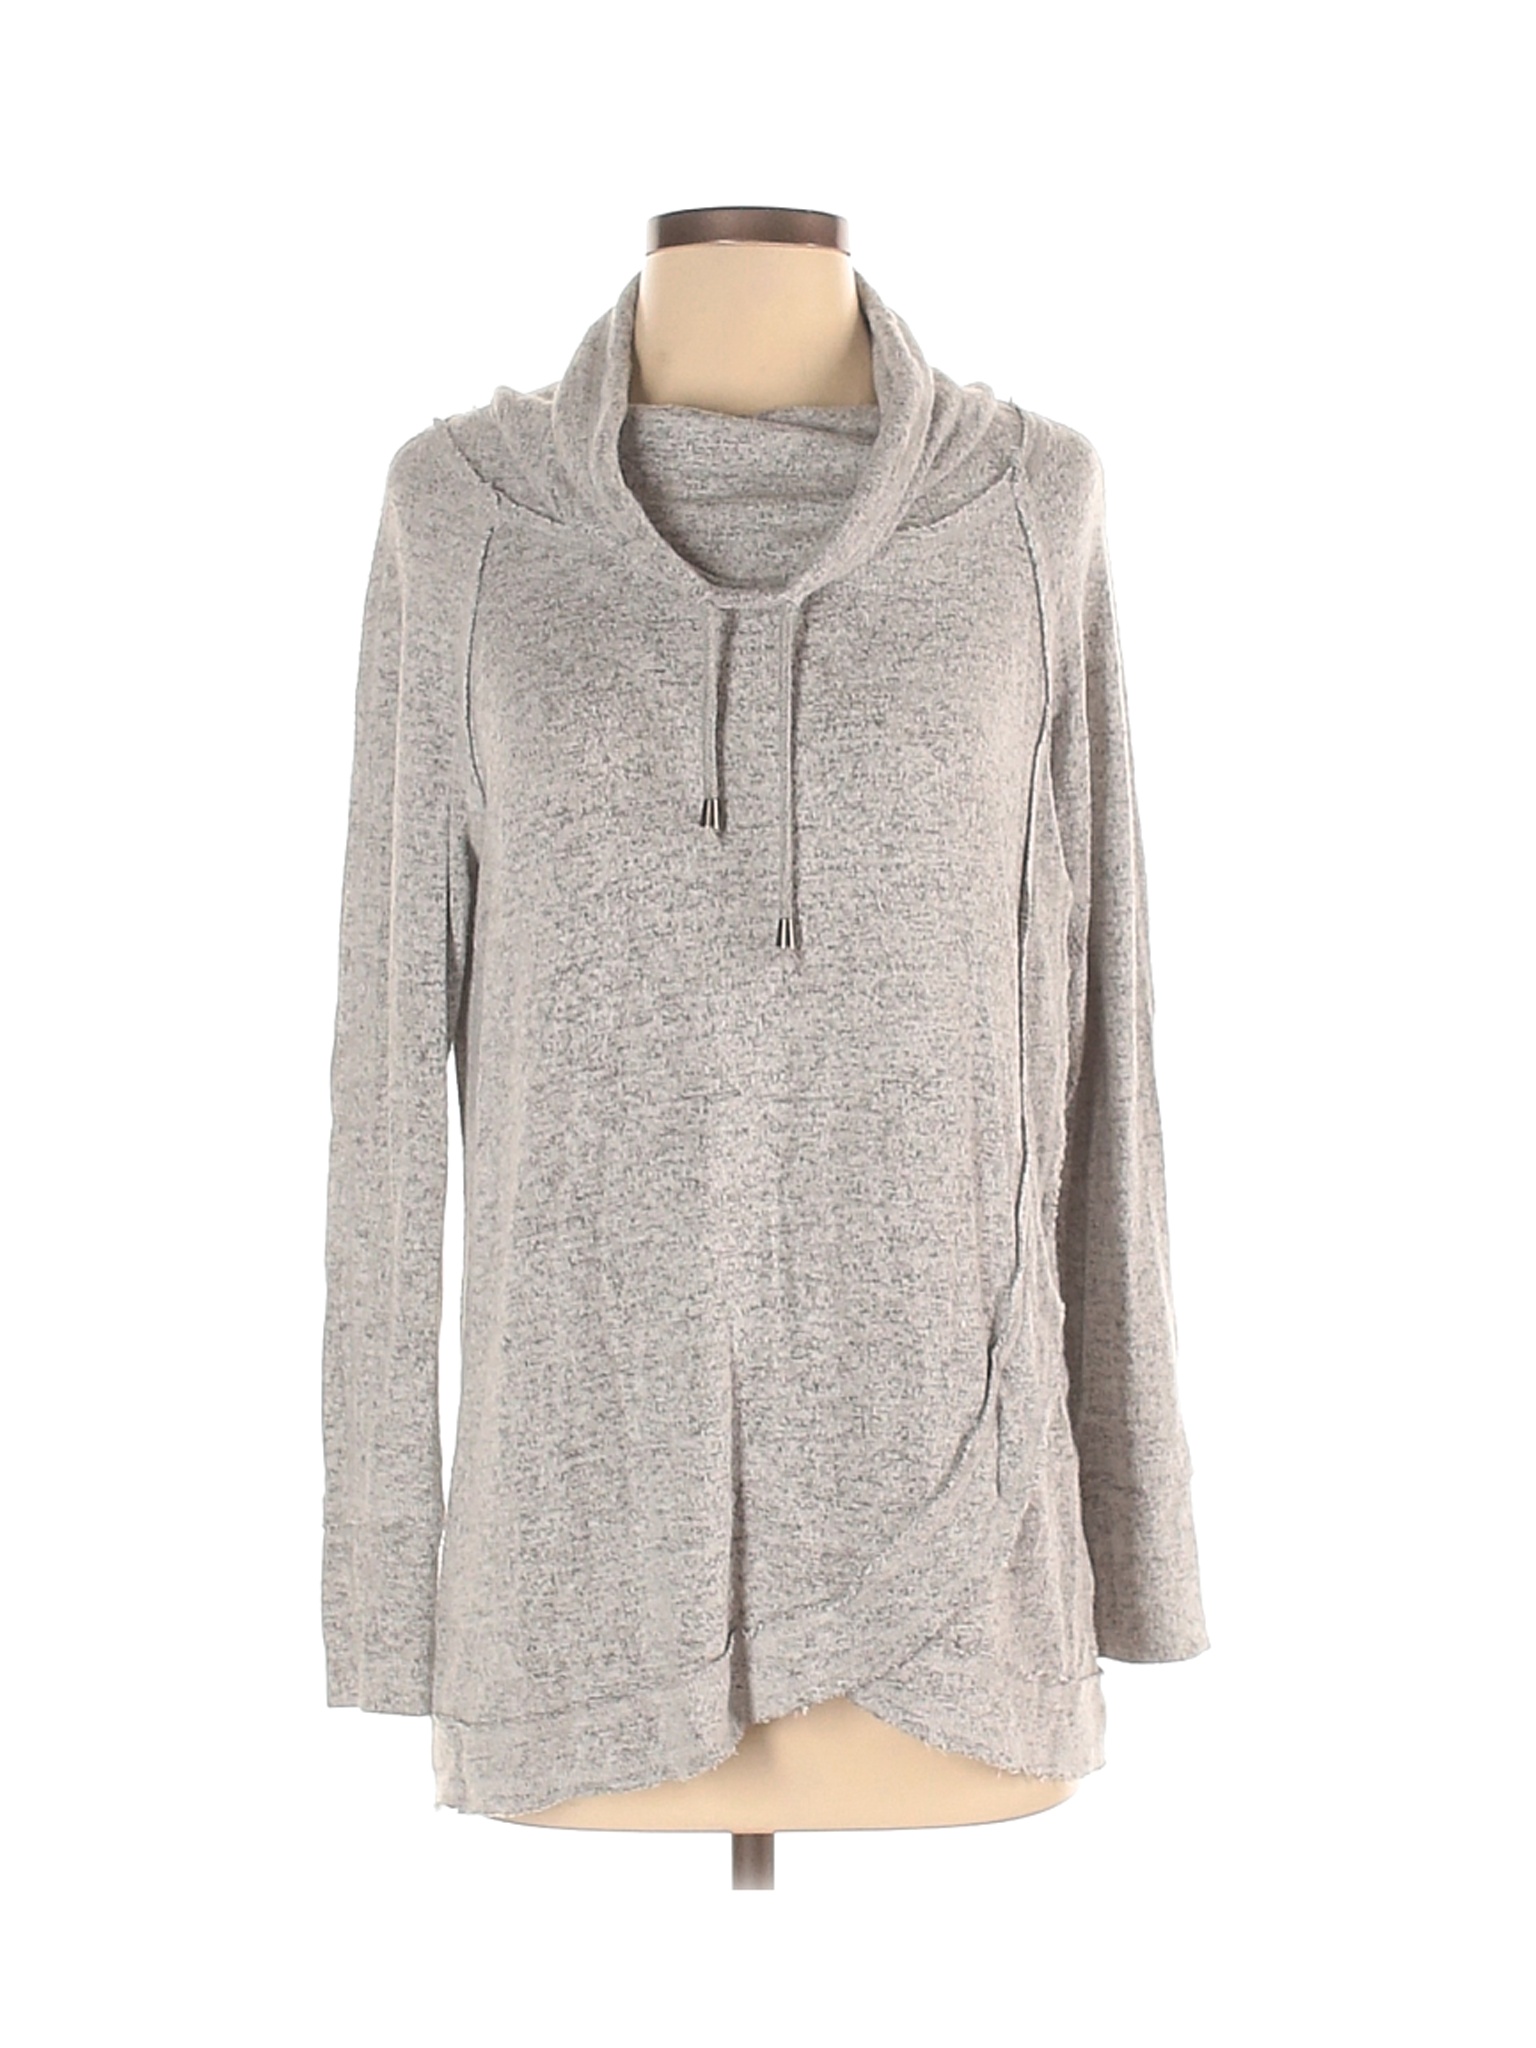 OSO Casuals Women Gray Pullover Sweater XS | eBay